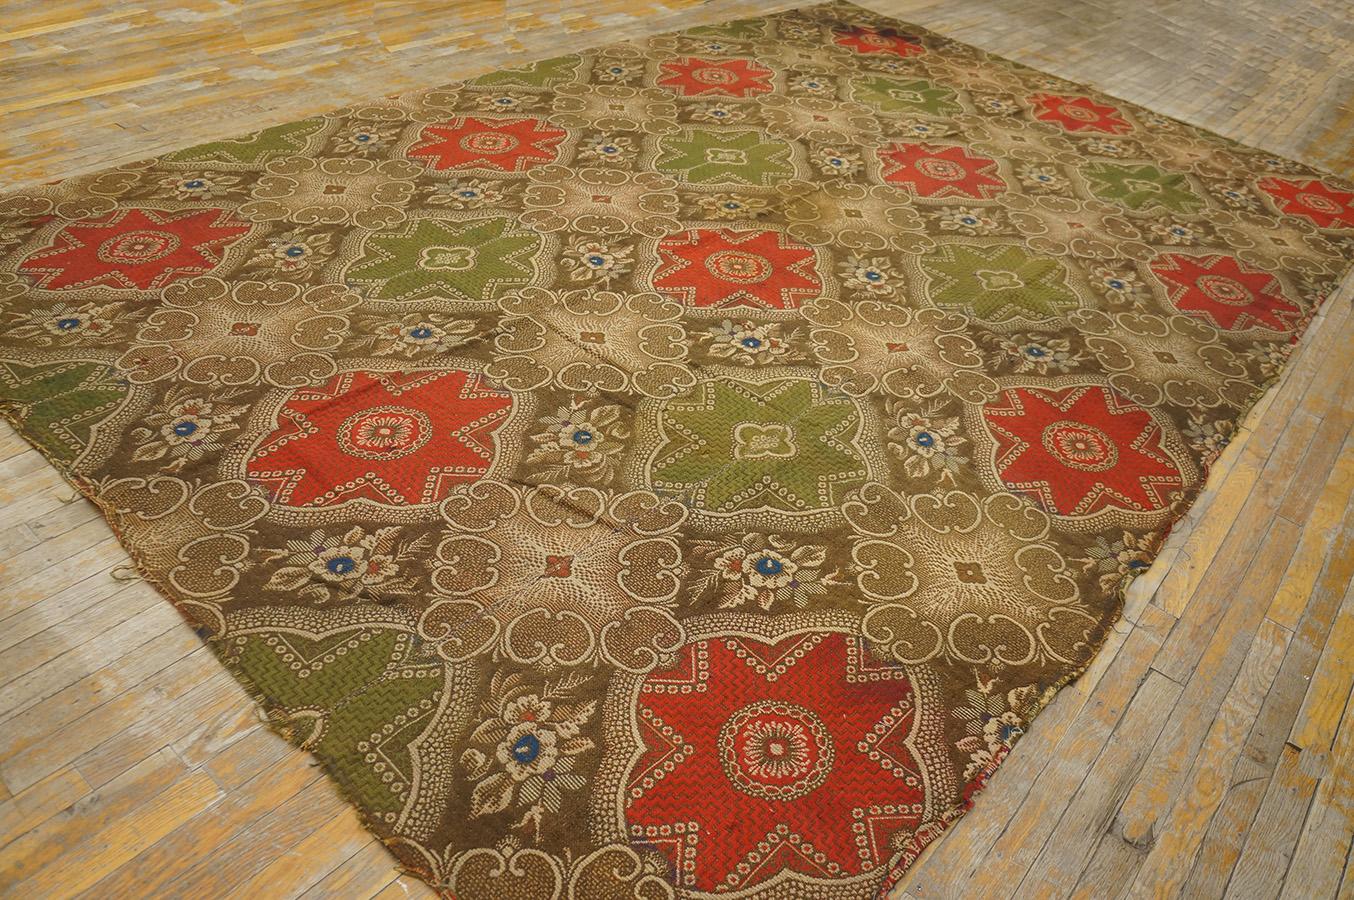 Hand-Woven Mid 19th Century American Ingrain Carpet ( 8' 2'' x 12' 9'' - 250 x 390 cm ) For Sale